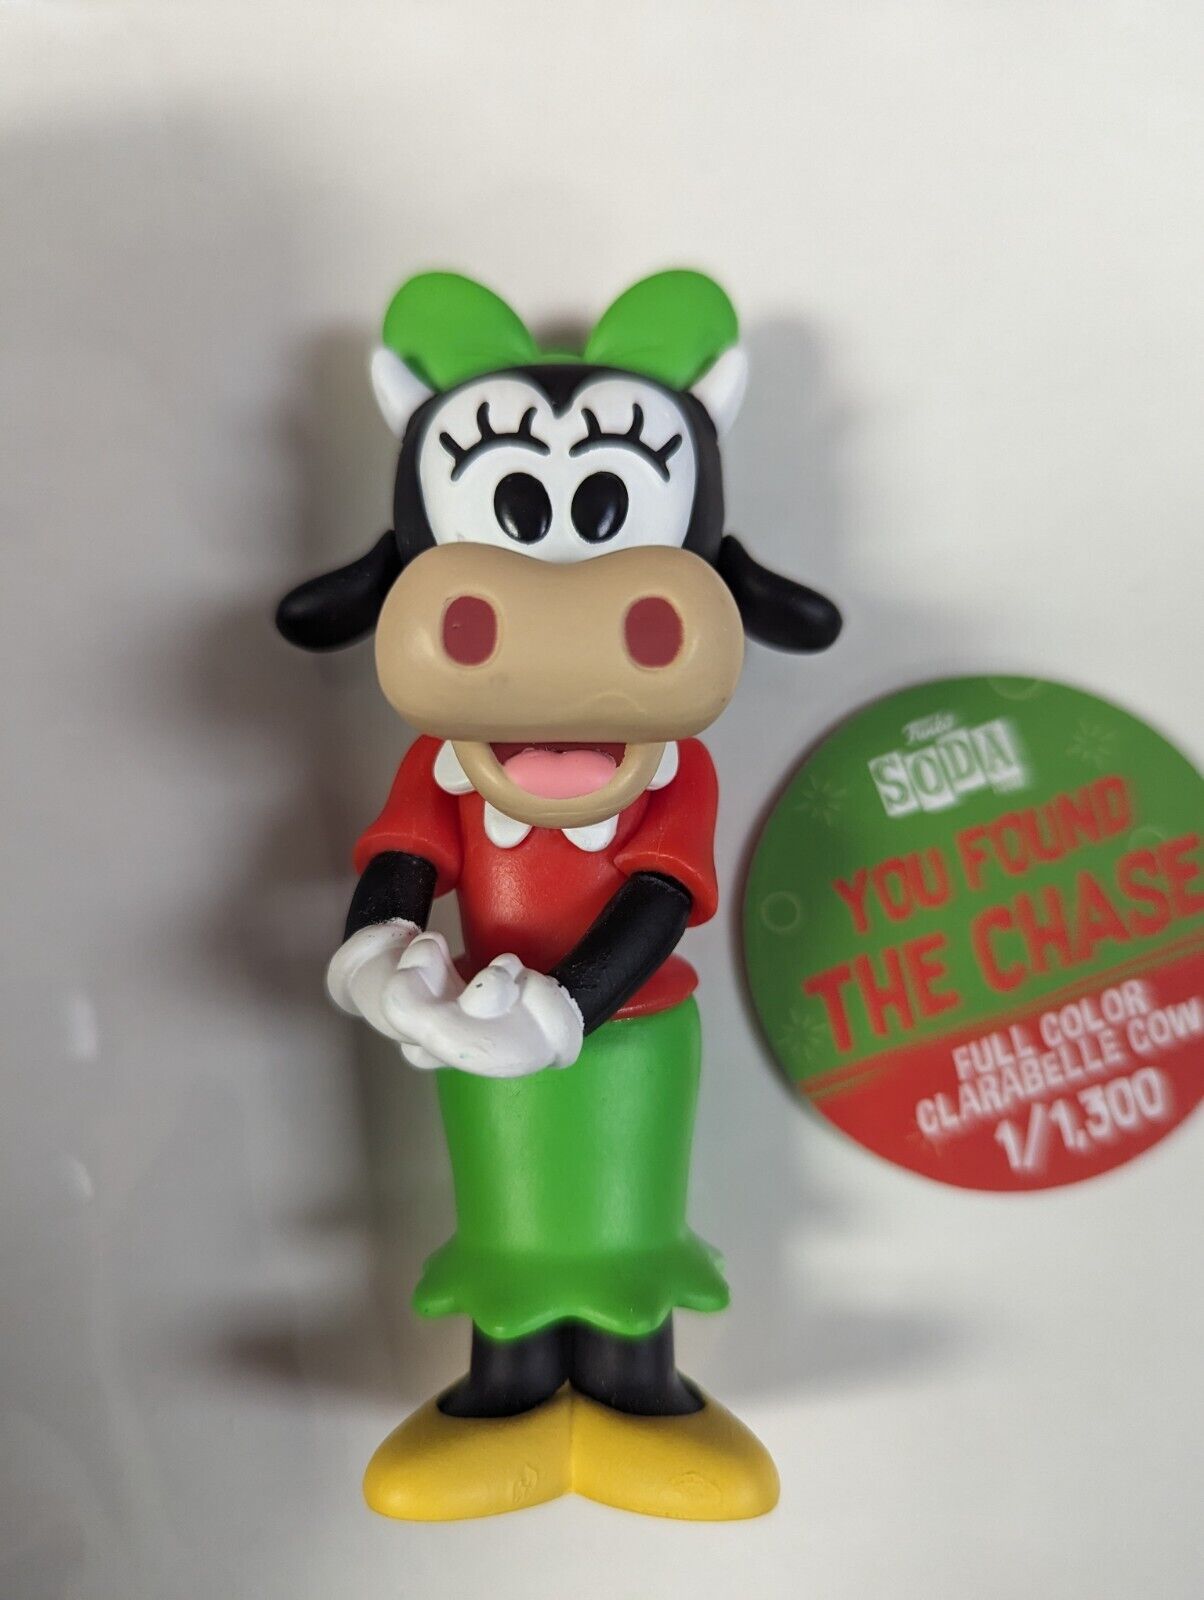 Funko Soda Clarabelle Cow Full Color Chase 1/1300 Vinyl Figure